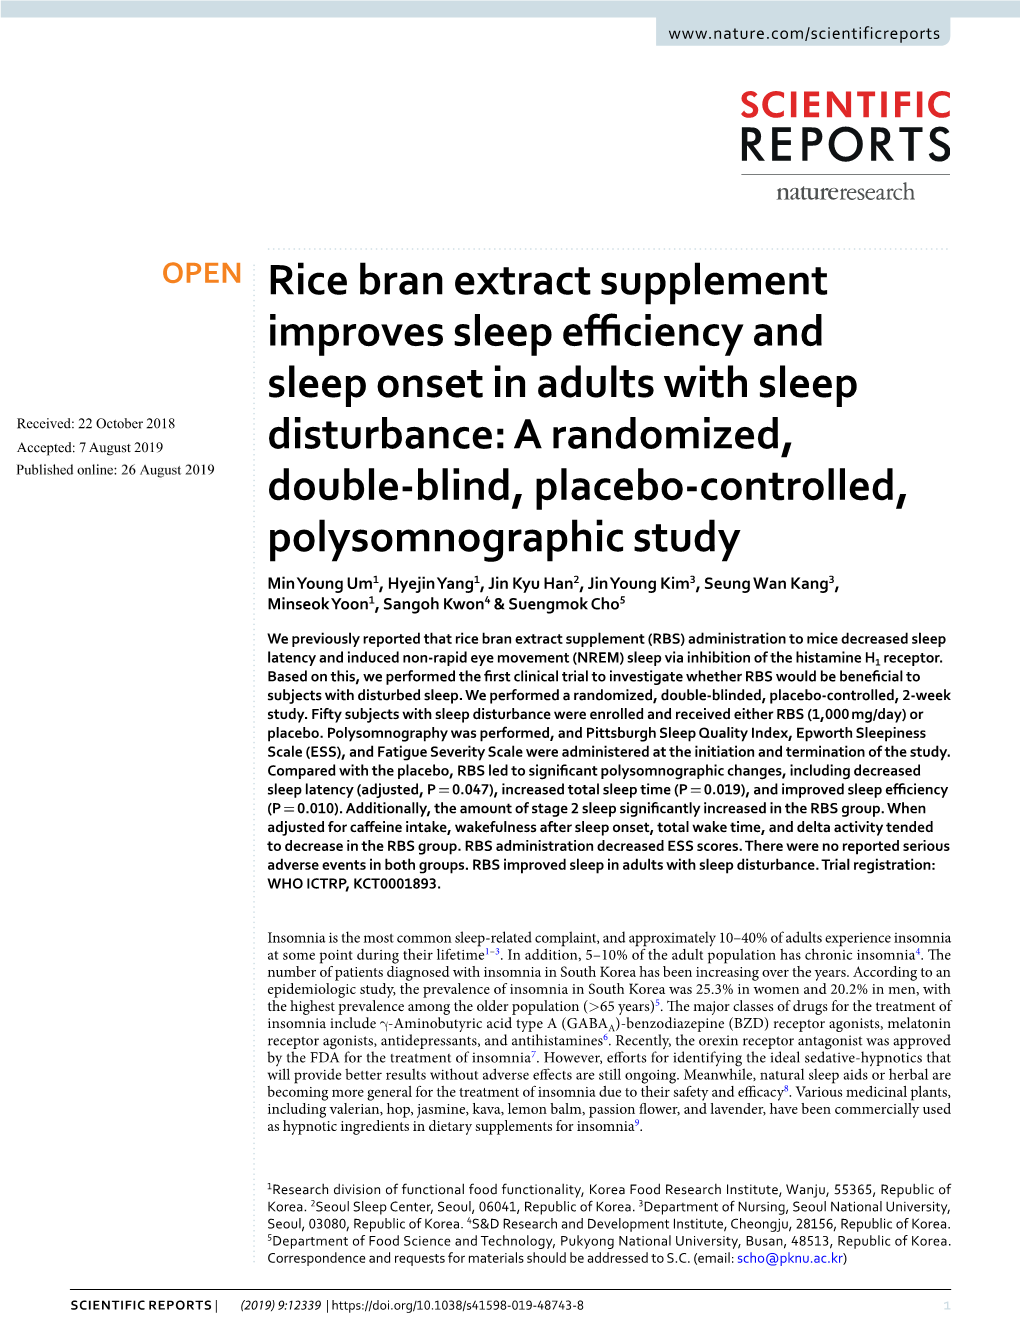 Rice Bran Extract Supplement Improves Sleep Efficiency